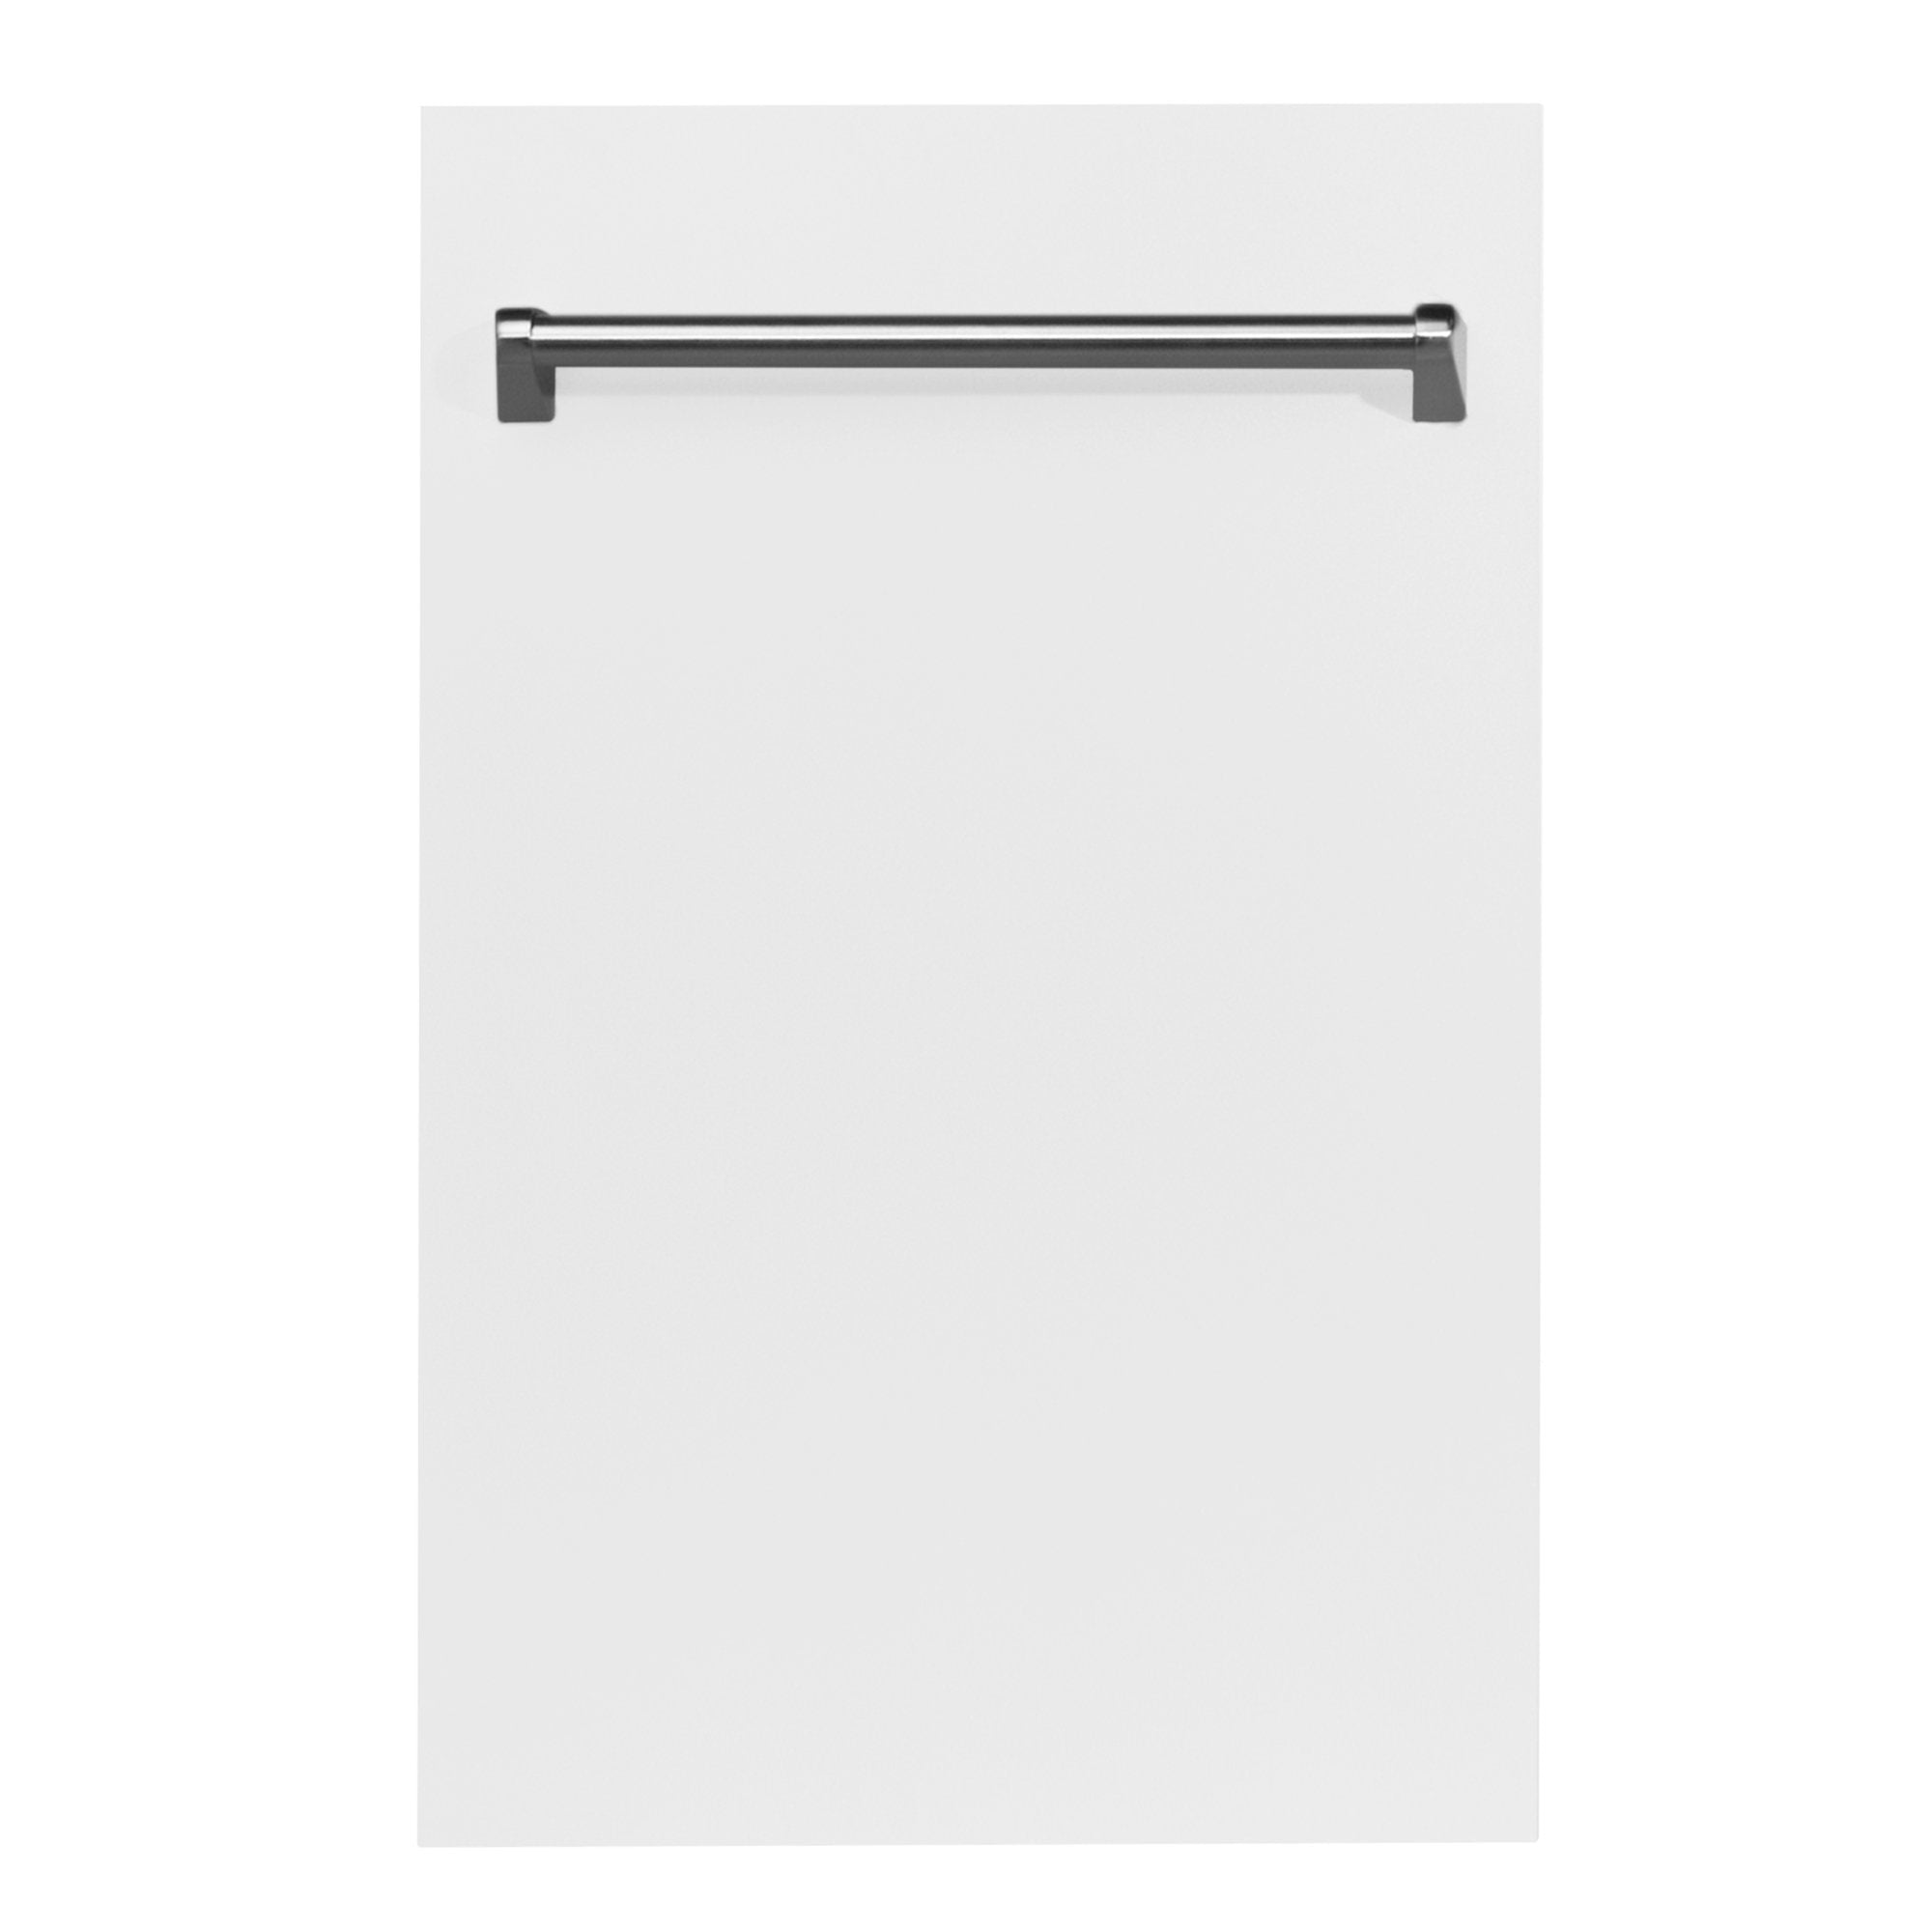 ZLINE 18" Dishwasher Panel with Traditional Handle